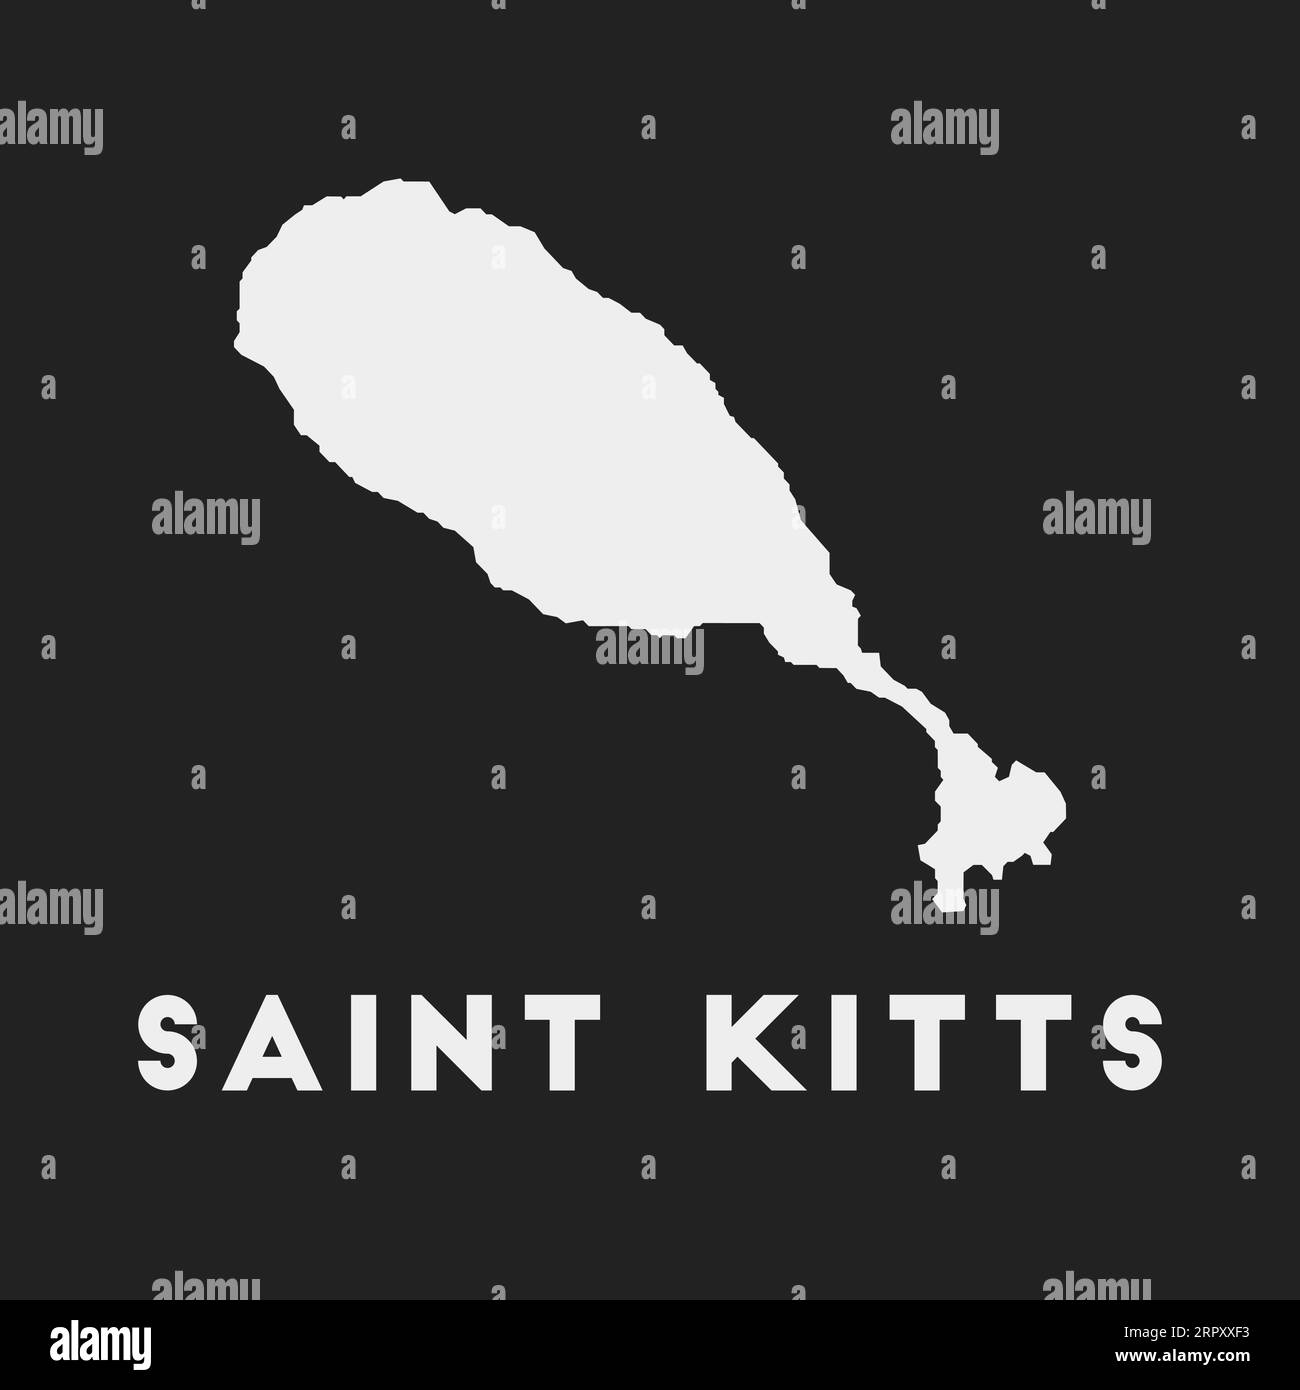 Saint Kitts icon. Island map on dark background. Stylish Saint Kitts map with island name. Vector illustration. Stock Vector